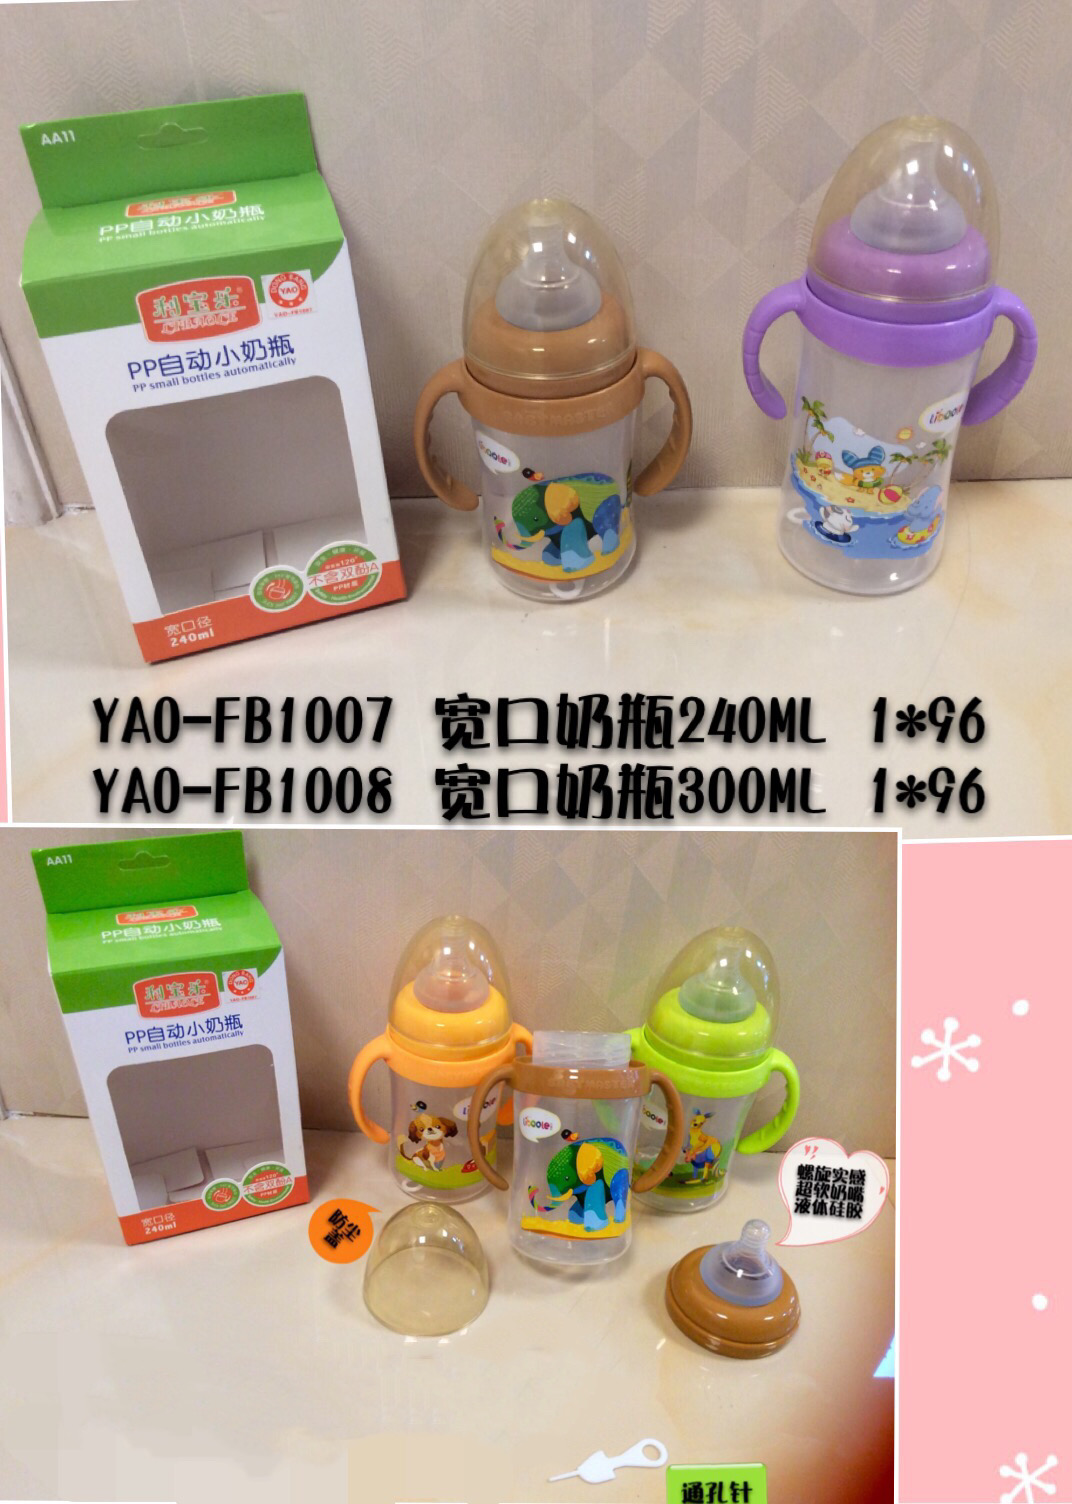 YAO-FB1007、YAO-FB1008 奶瓶